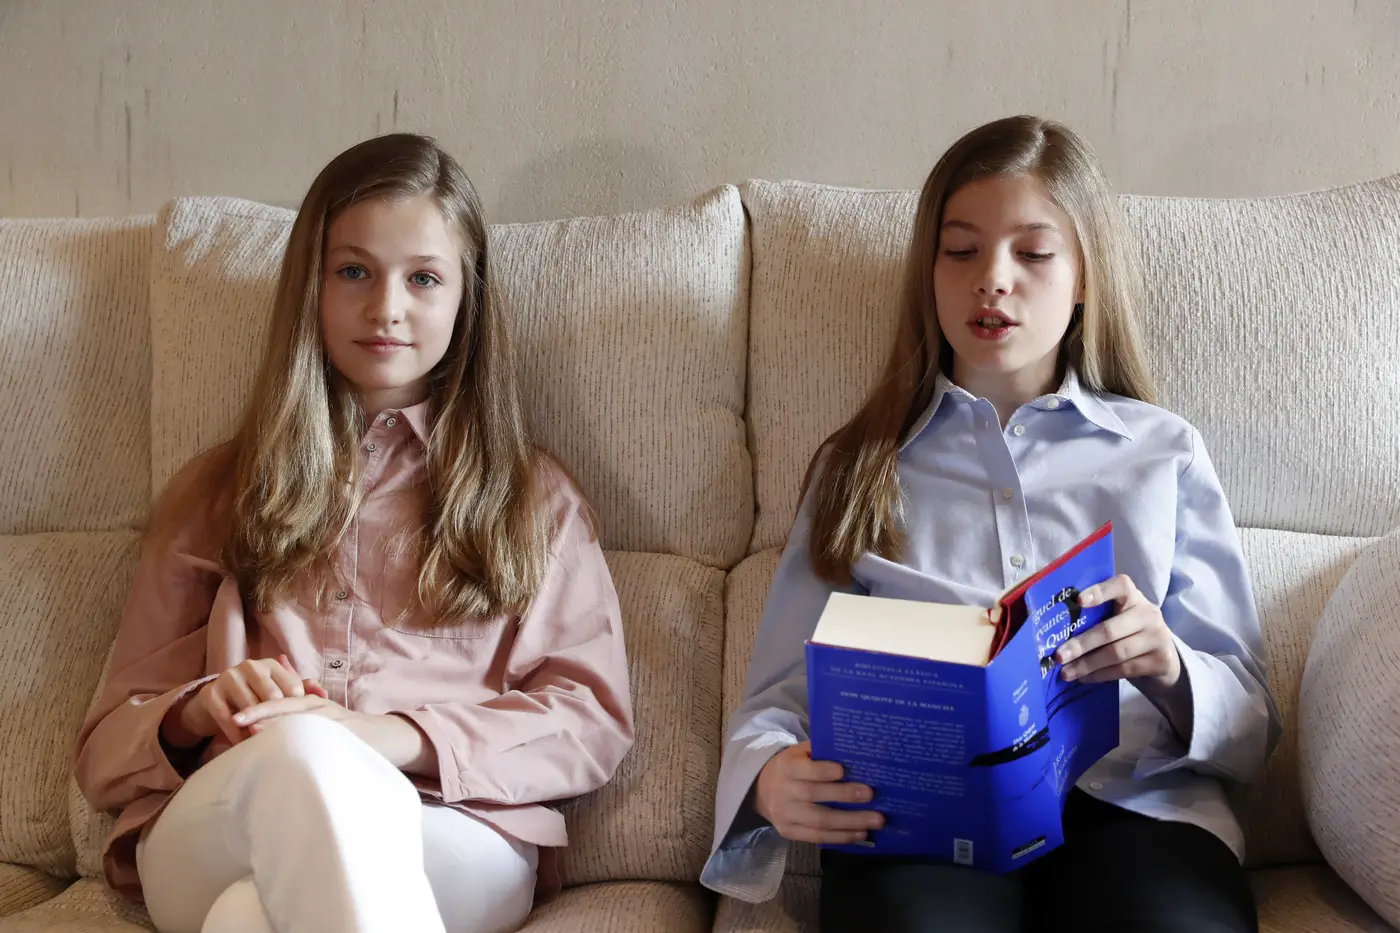 Princess Leonor and Infanta Sofia participated in the Book Reading